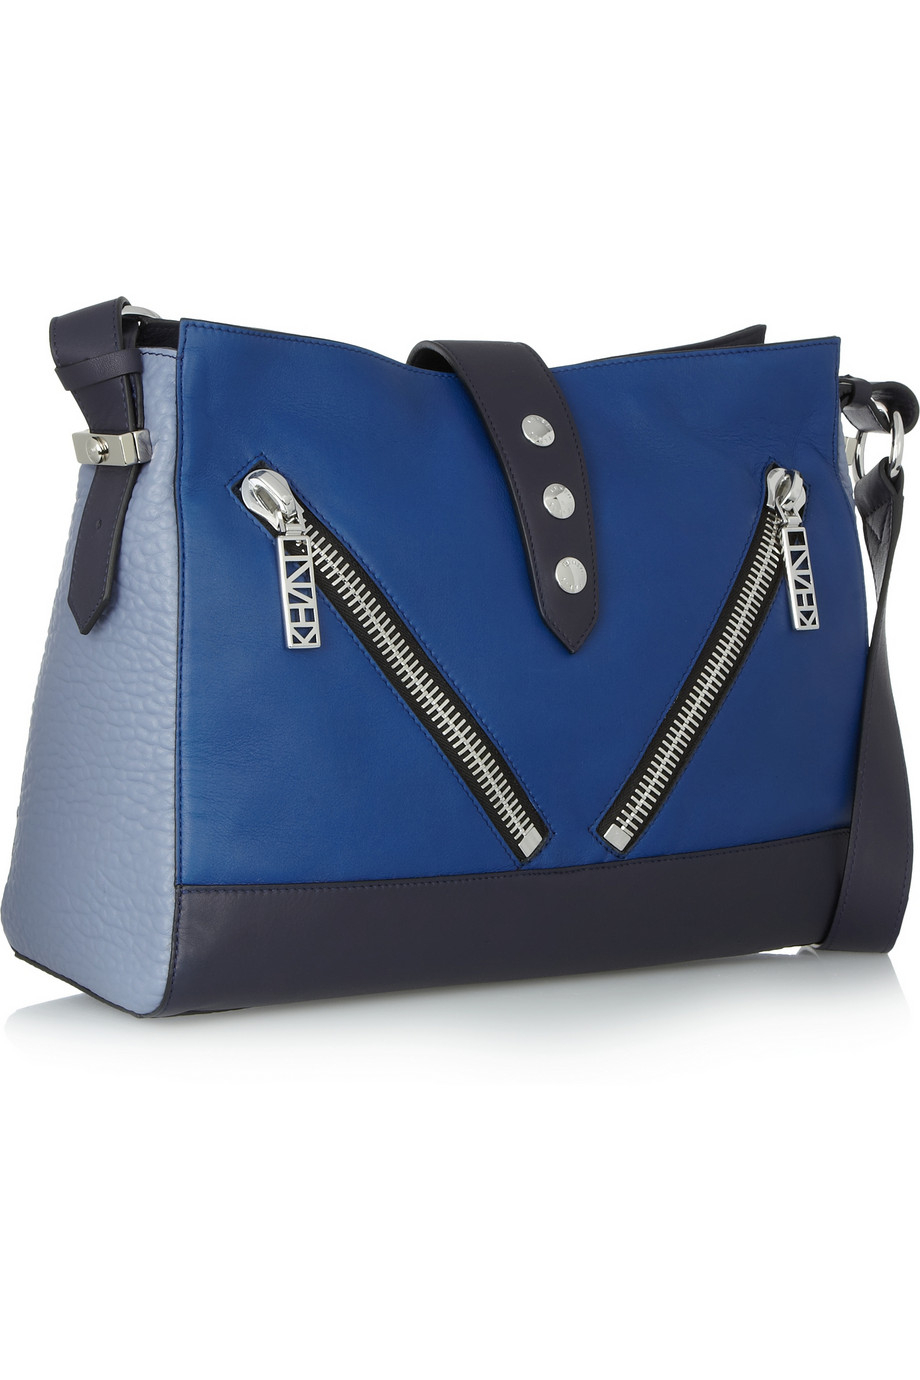 Kenzo Kalifornia Leather Shoulder Bag in Blue | Lyst